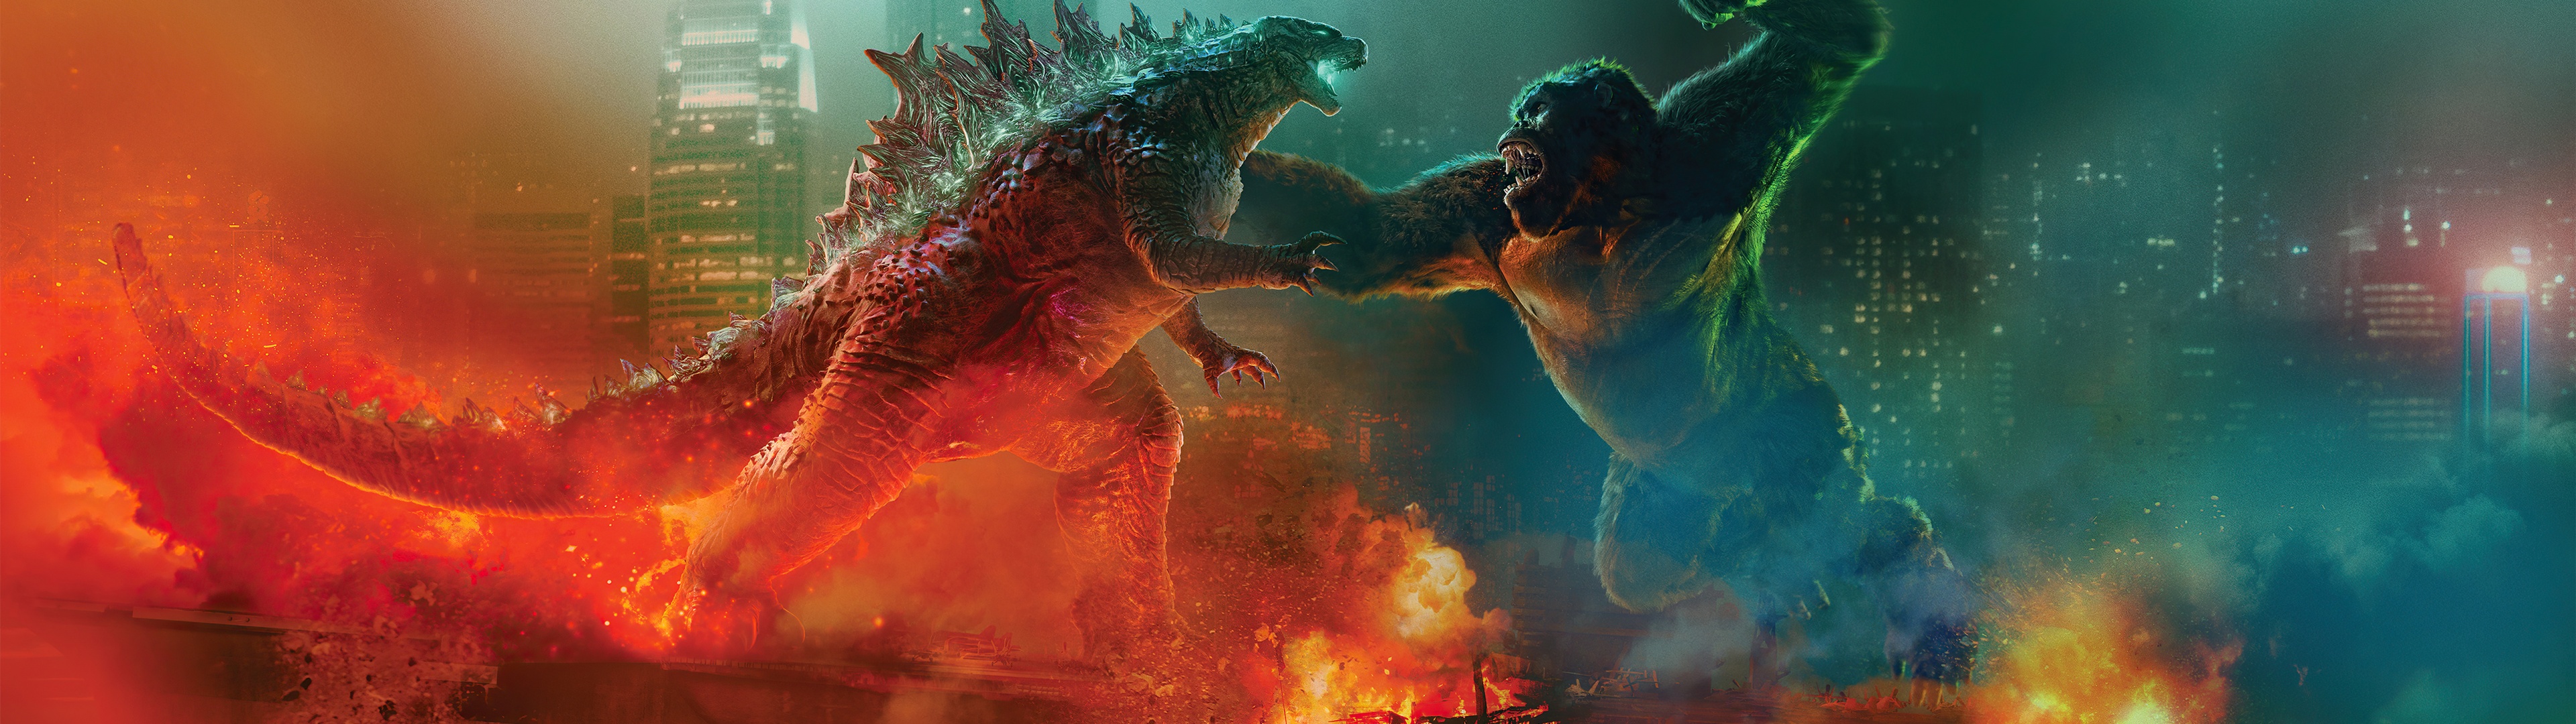 Godzilla vs Kong Wallpaper 4K, 2021 Movies, 5K, Movies, #4949